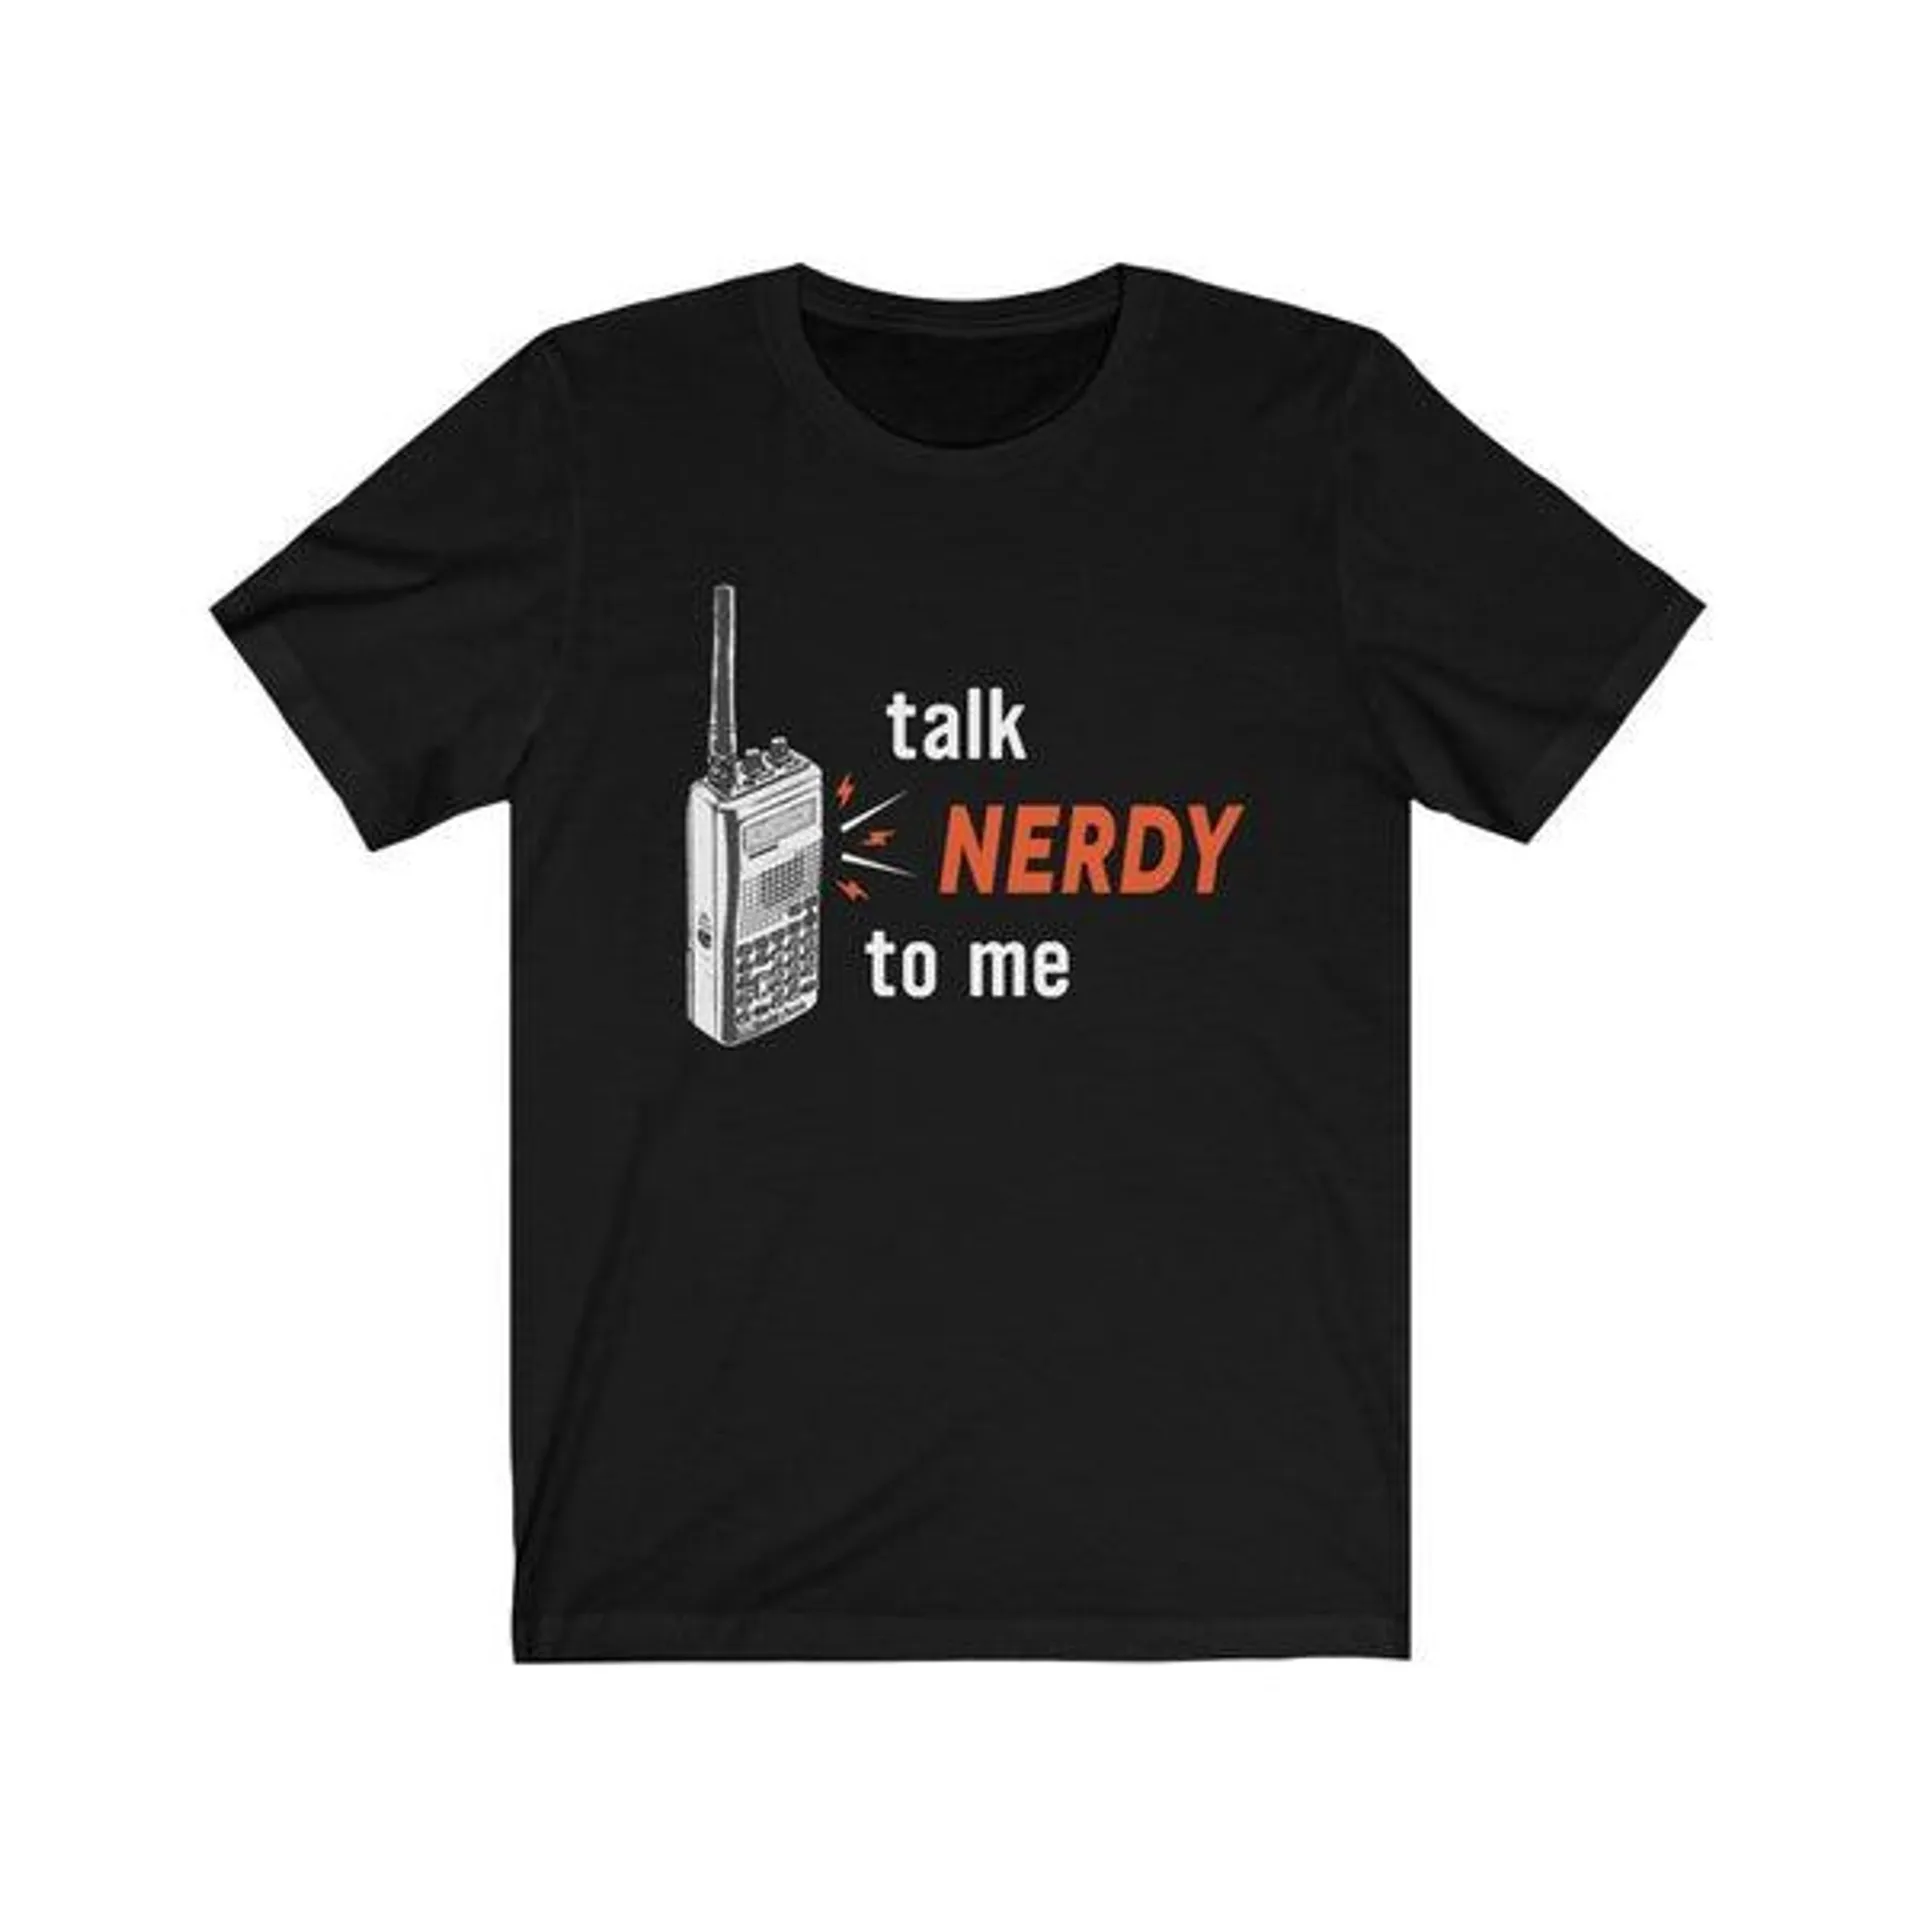 RadioShack "Talk Nerdy to Me" T-Shirt